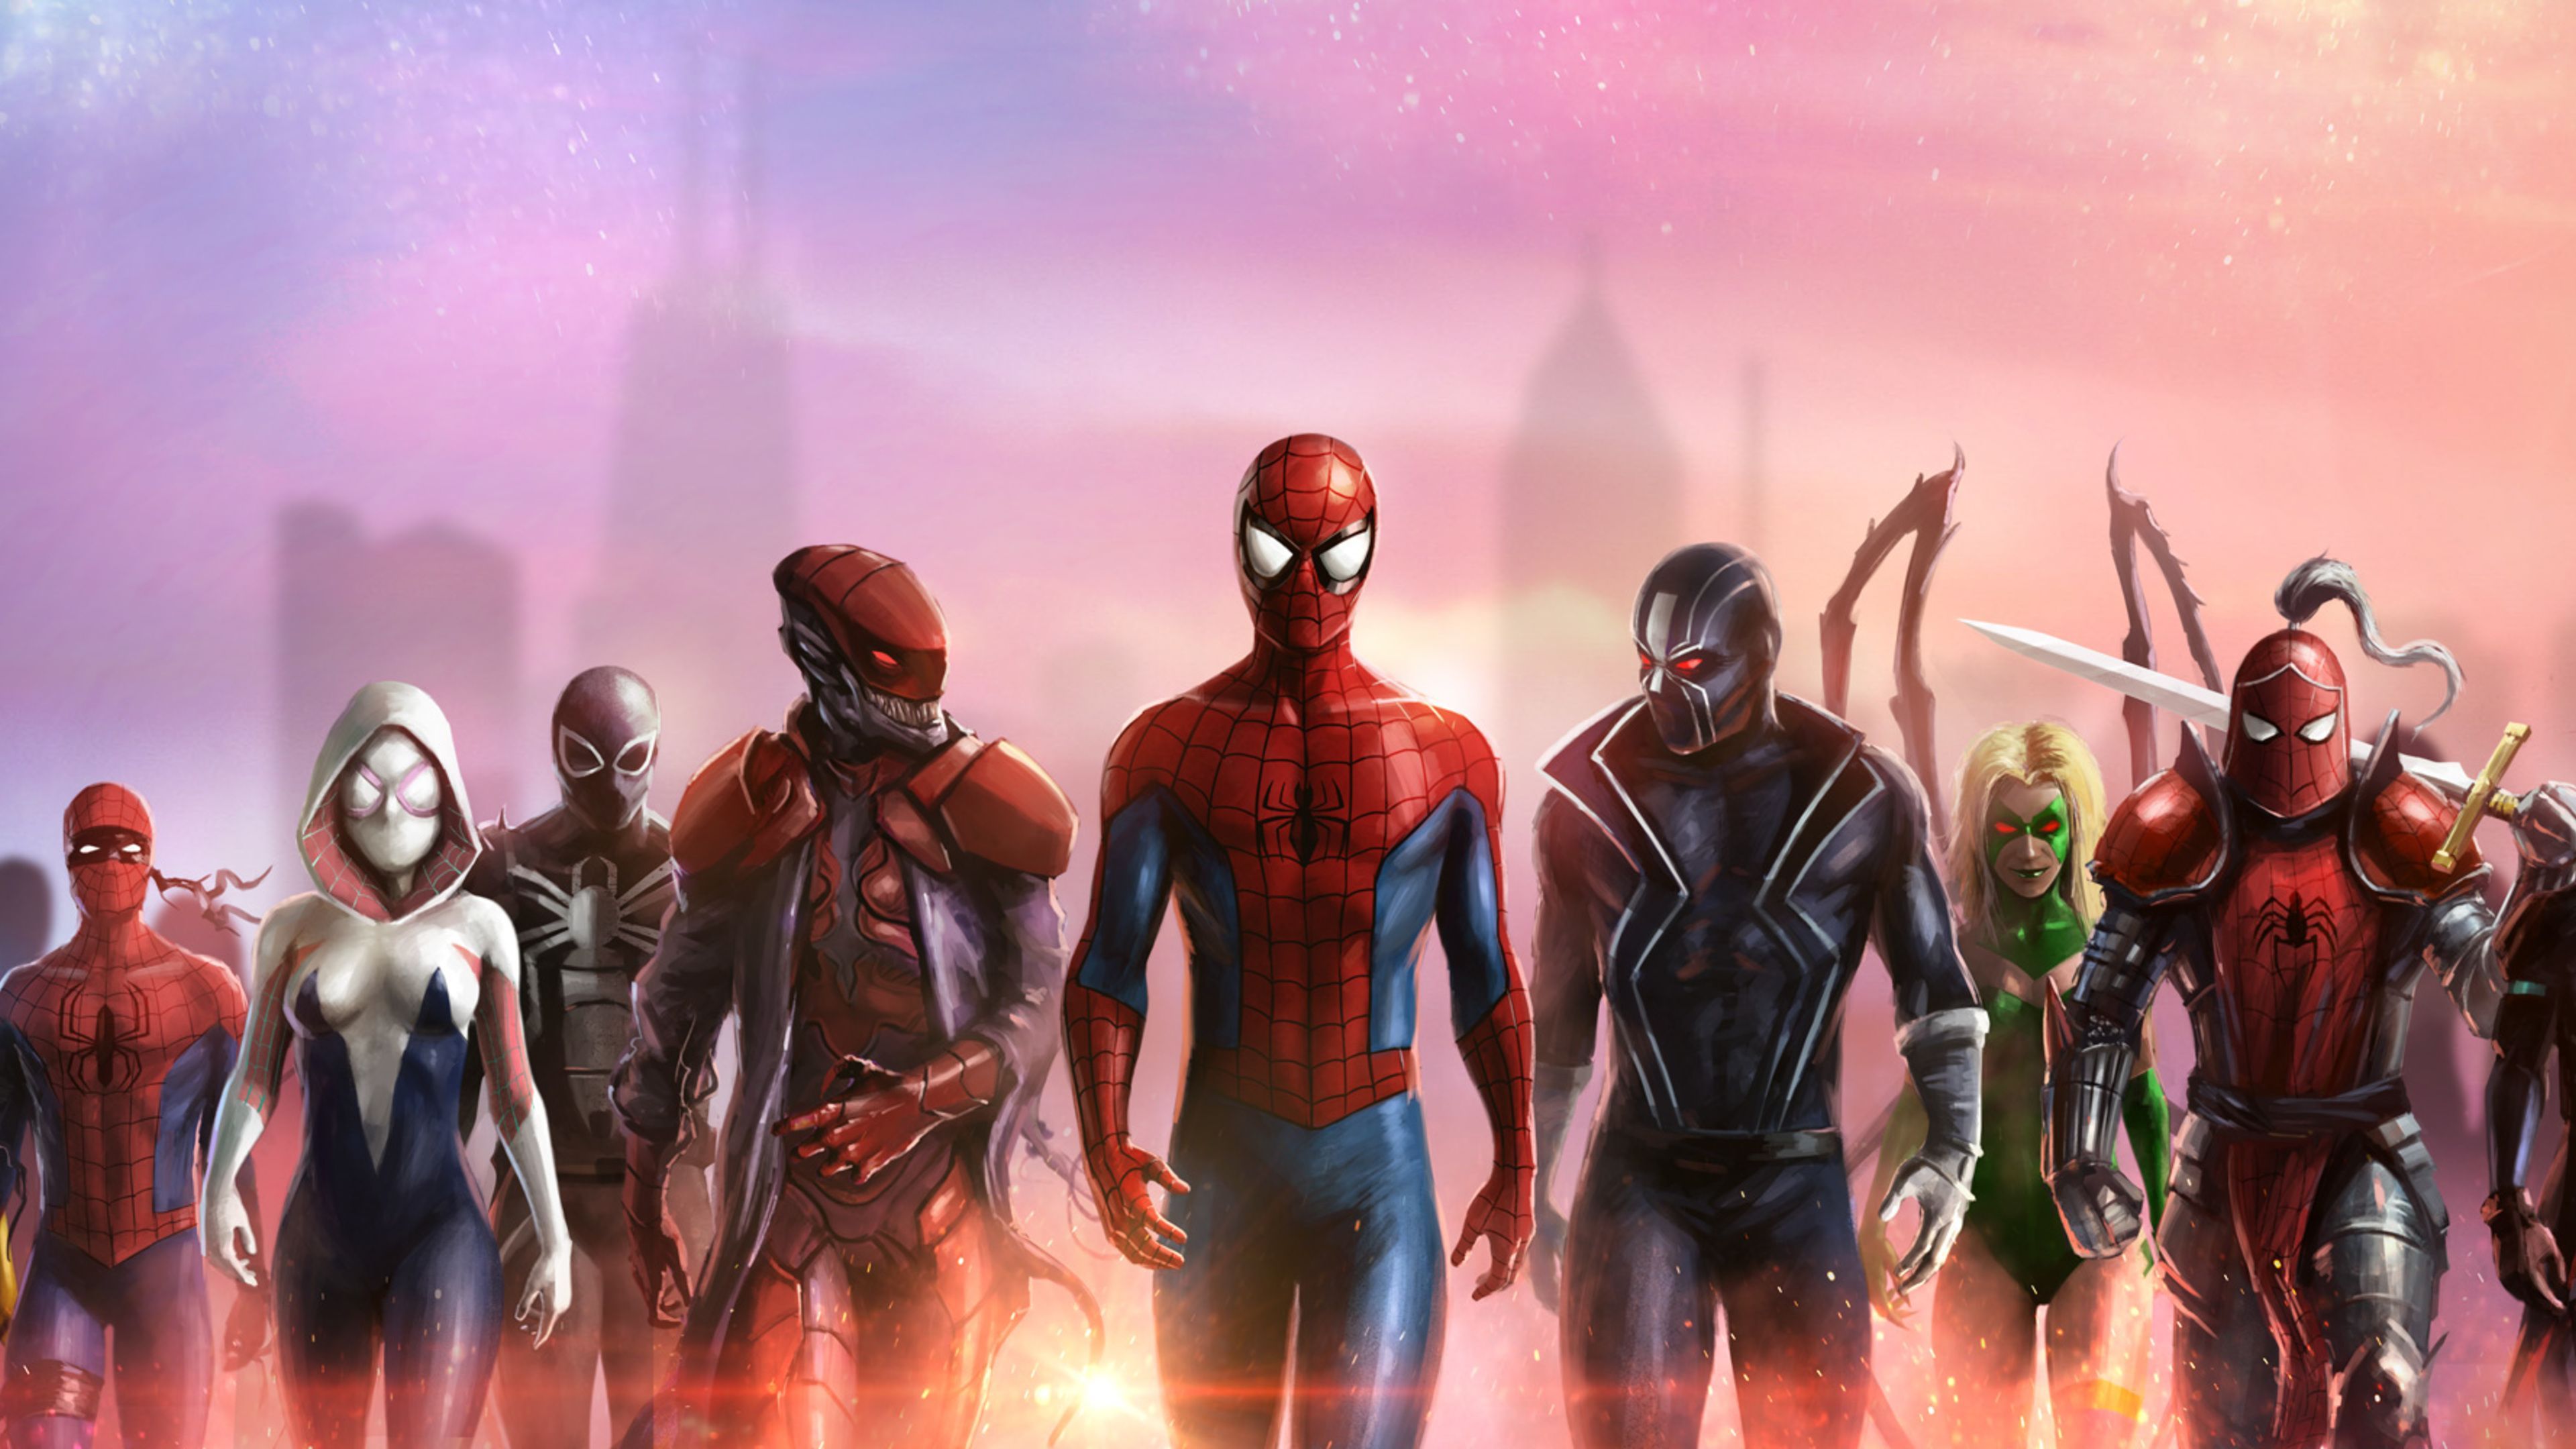 Spiderman And His Team superheroes wallpaper, spiderman wallpaper, hd- wallpaper, digital art wallpaper, artwork wallpaper, 4k-. Spiderman, Art, Art wallpaper